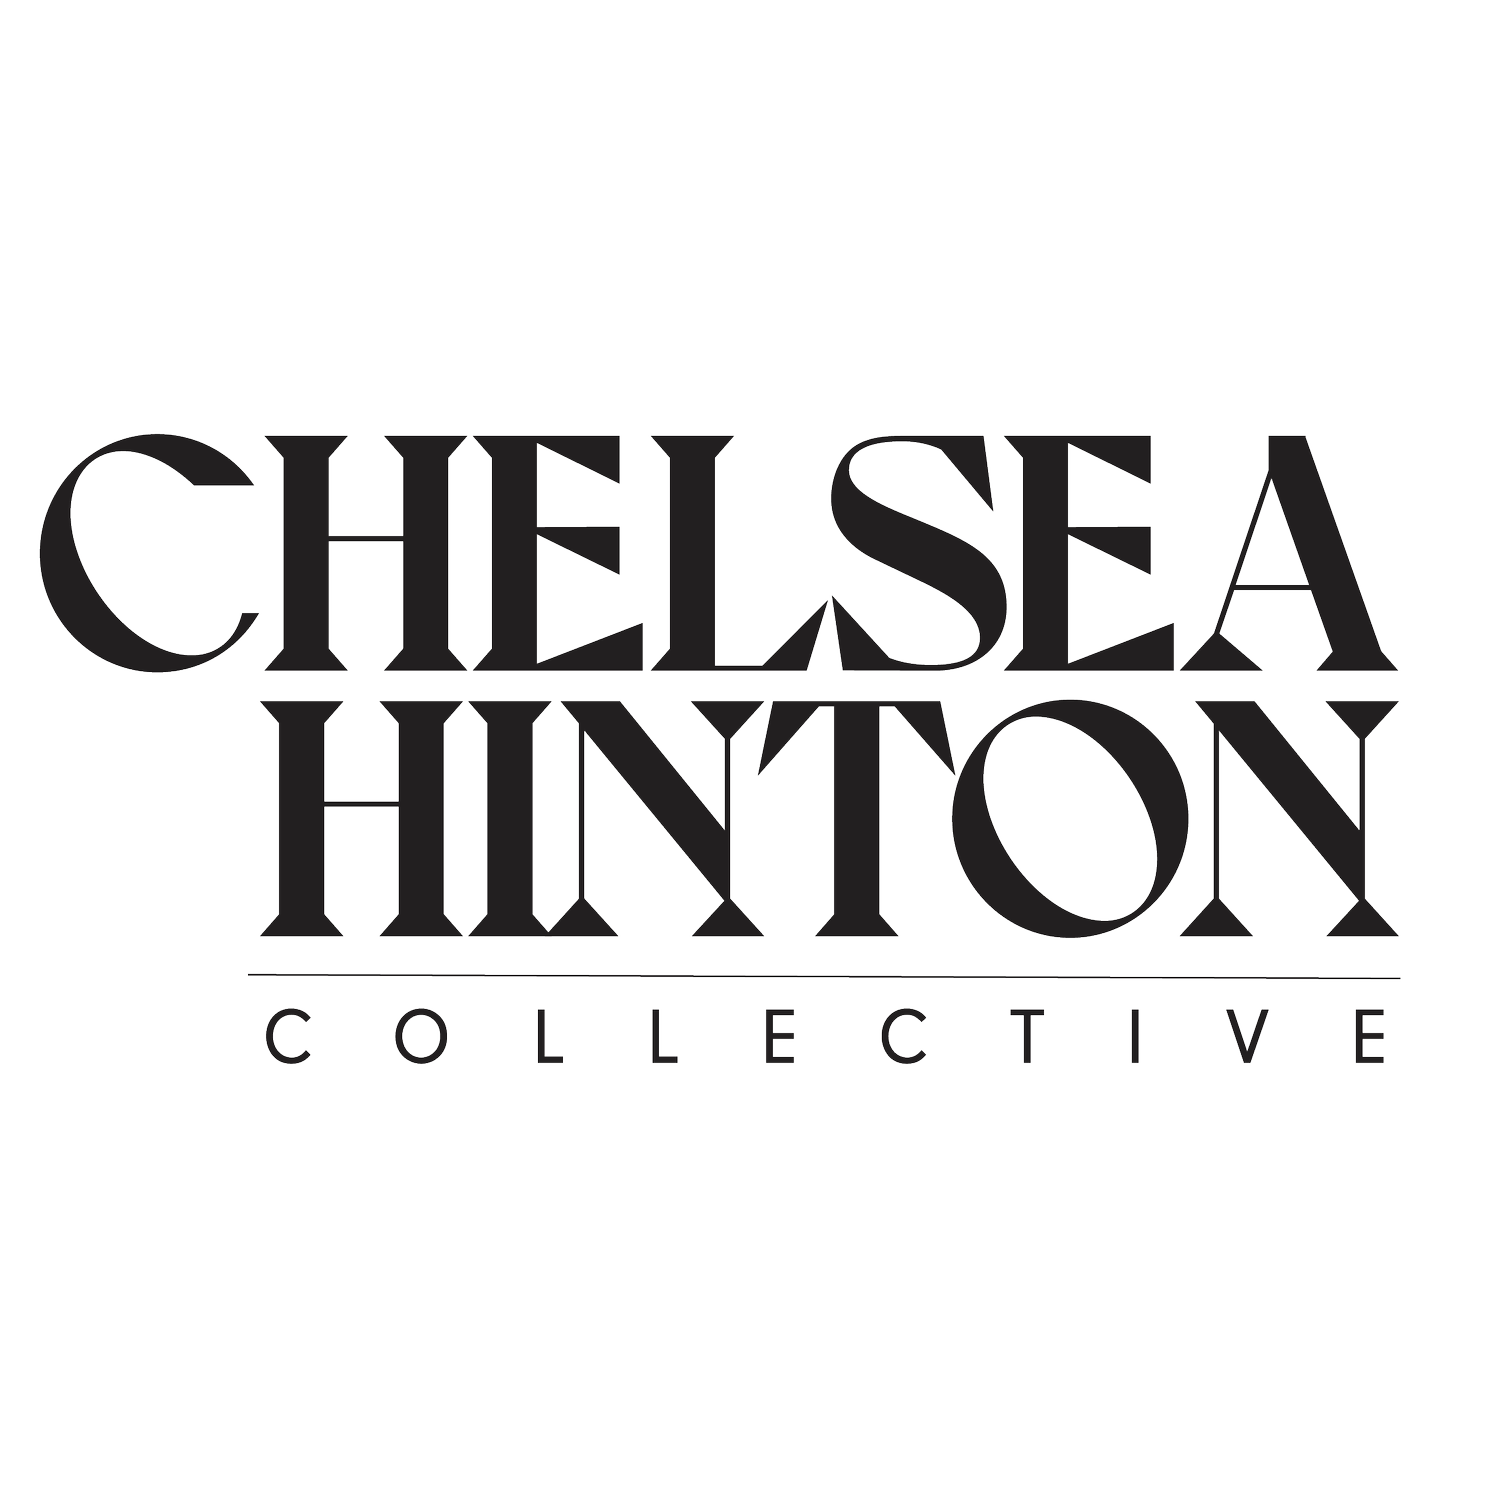 CHELSEA HINTON COLLECTIVE